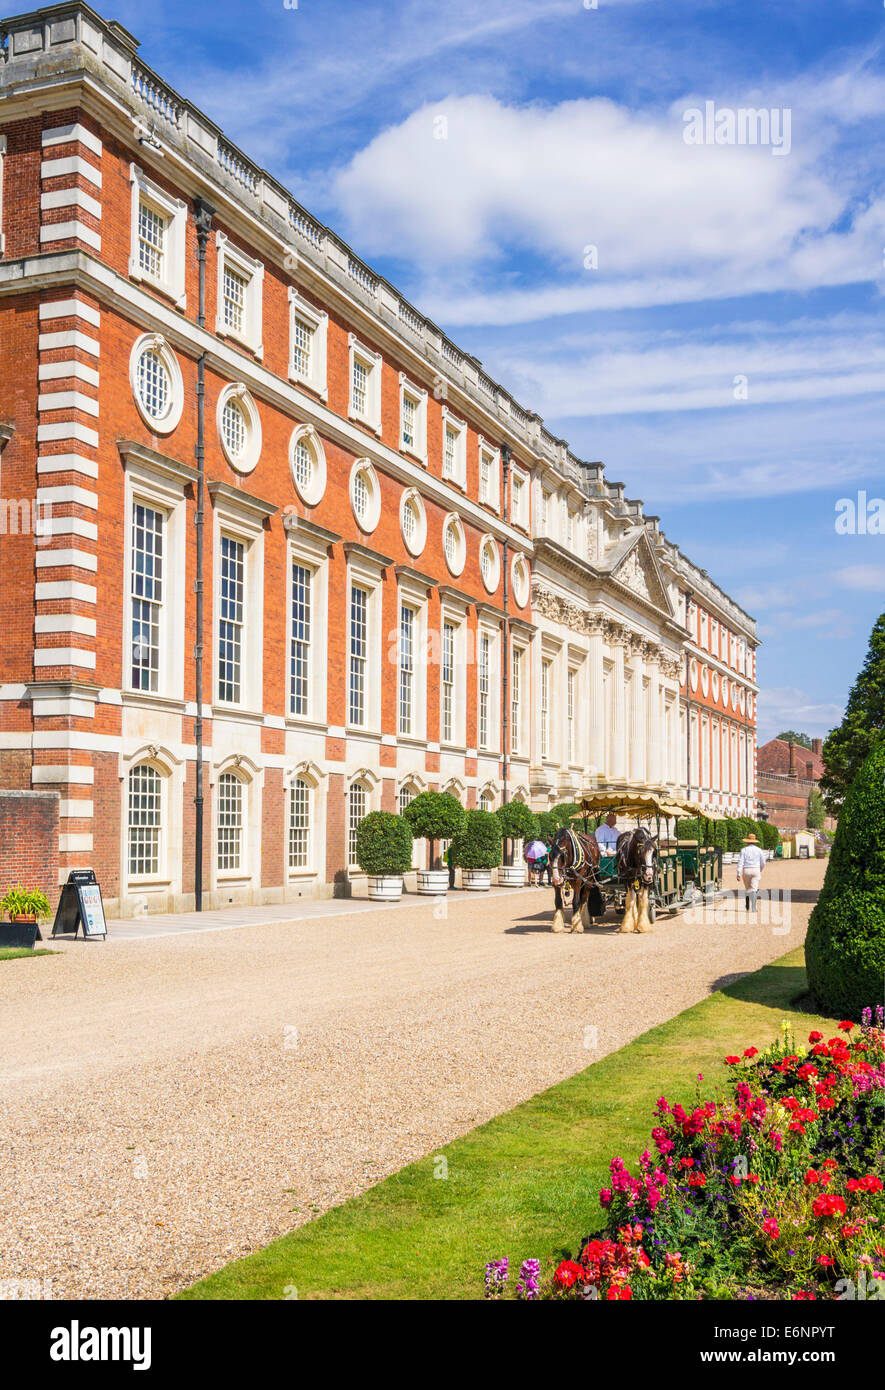 Shire Horses ziehen Touristen Wagen Hampton Court Palace vorderen London England UK GB EU Osteuropa Stockfoto